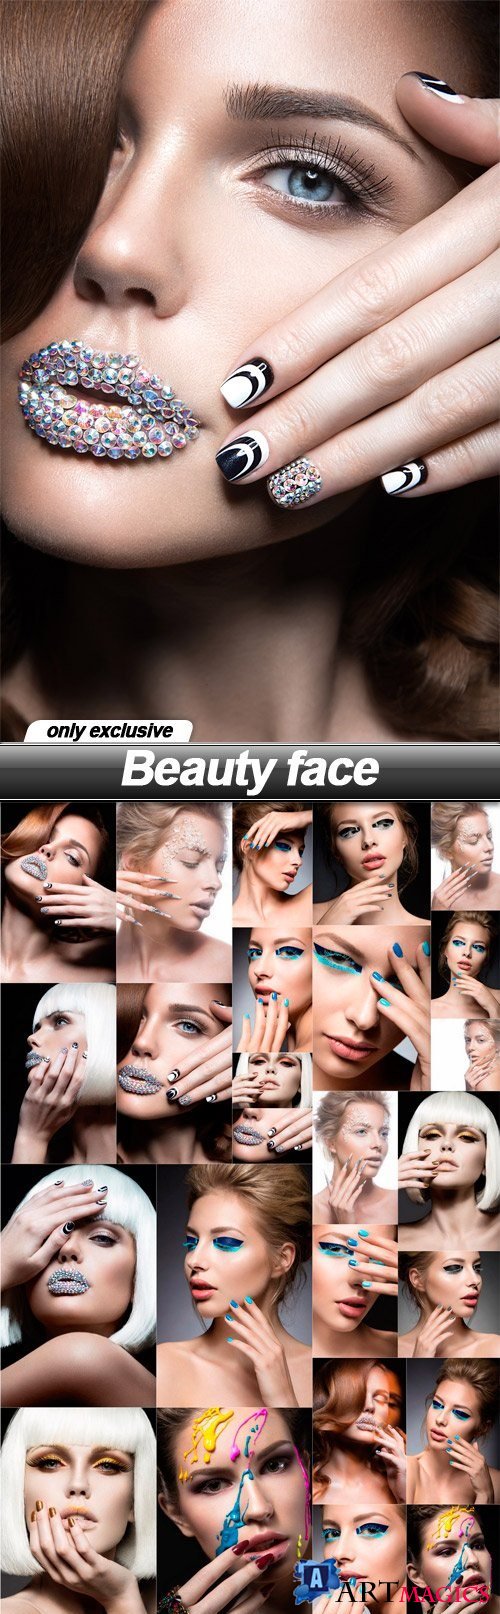 Beauty face - 25 UHQ JPEG